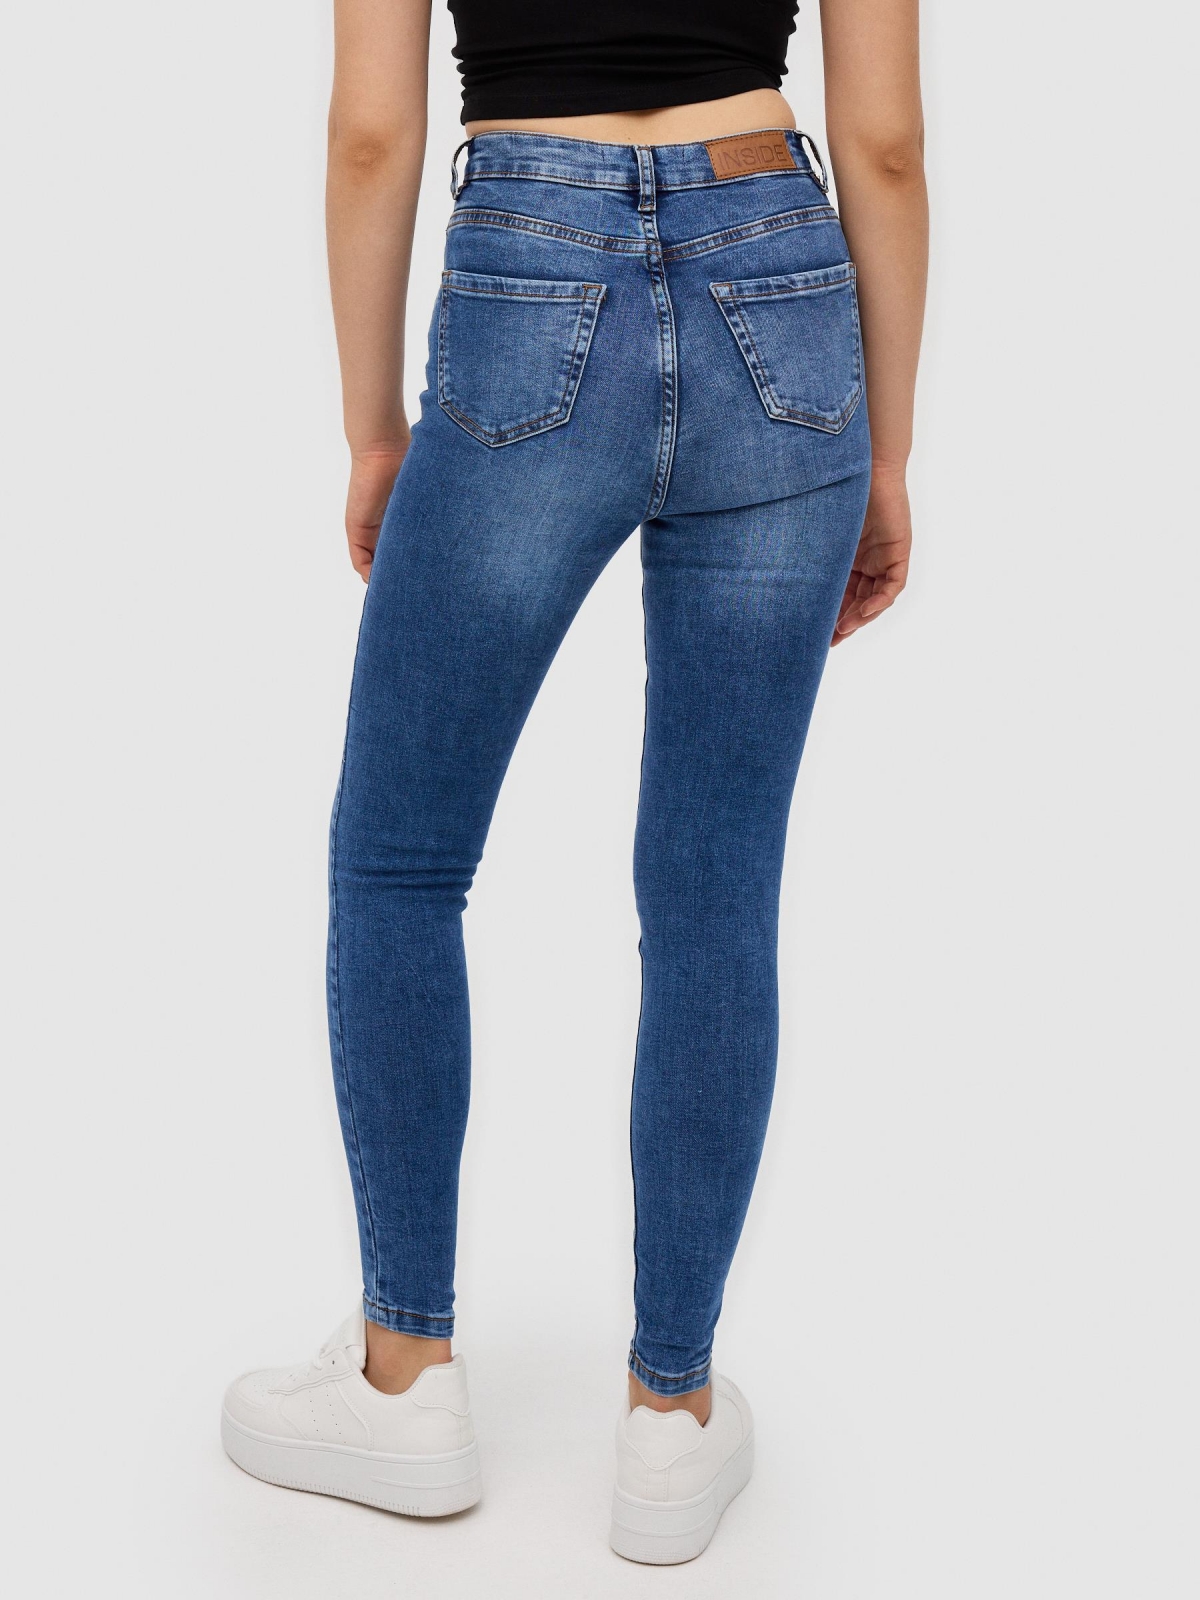 Denim skinny jeans blue middle back view